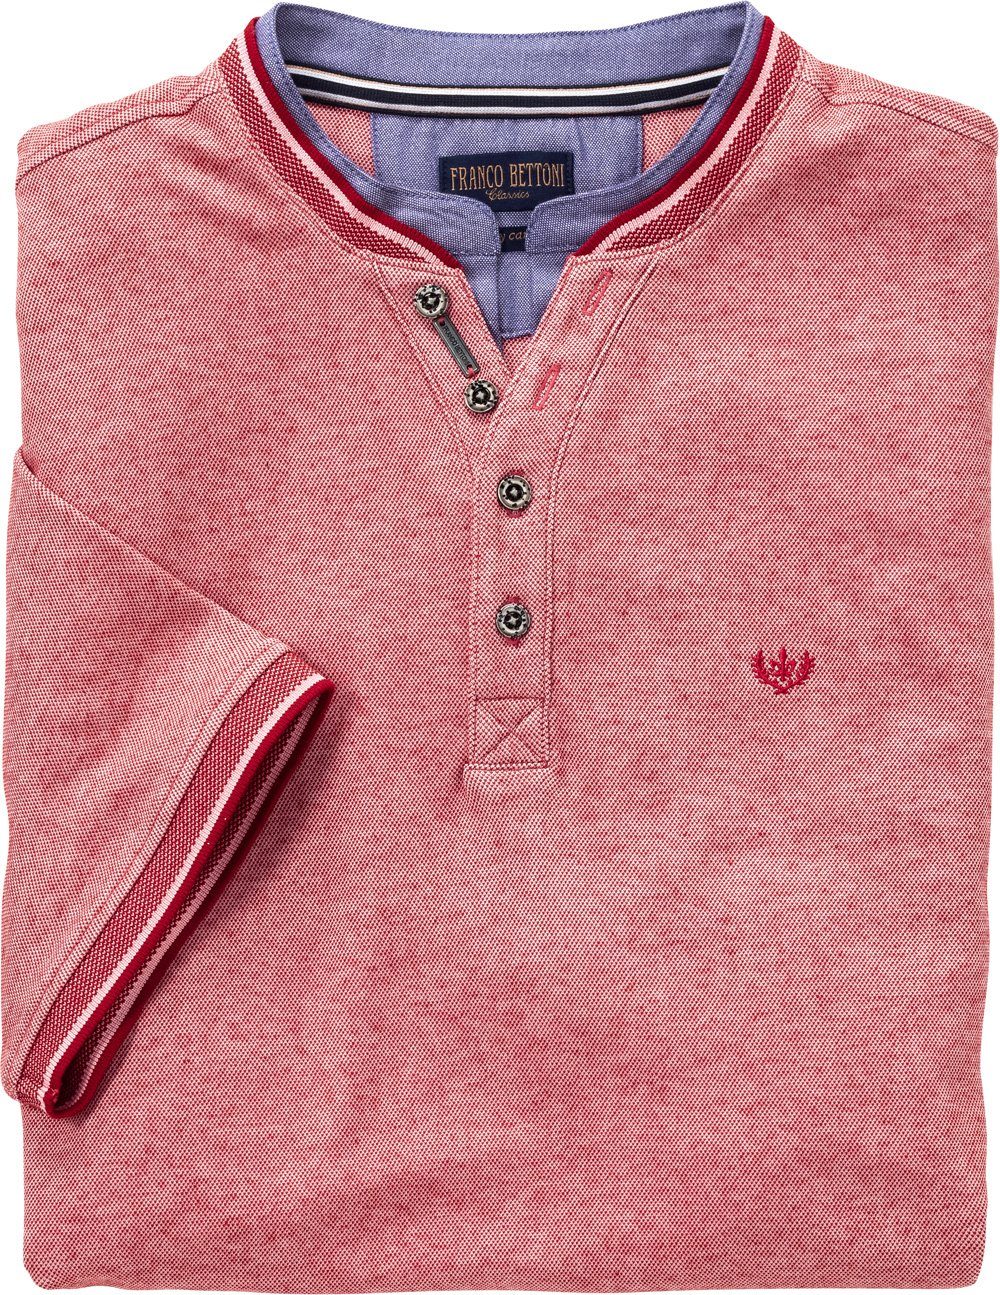 Bettoni Franco Serafino-Shirt Kurzarmshirt rot sportlich-elegantes